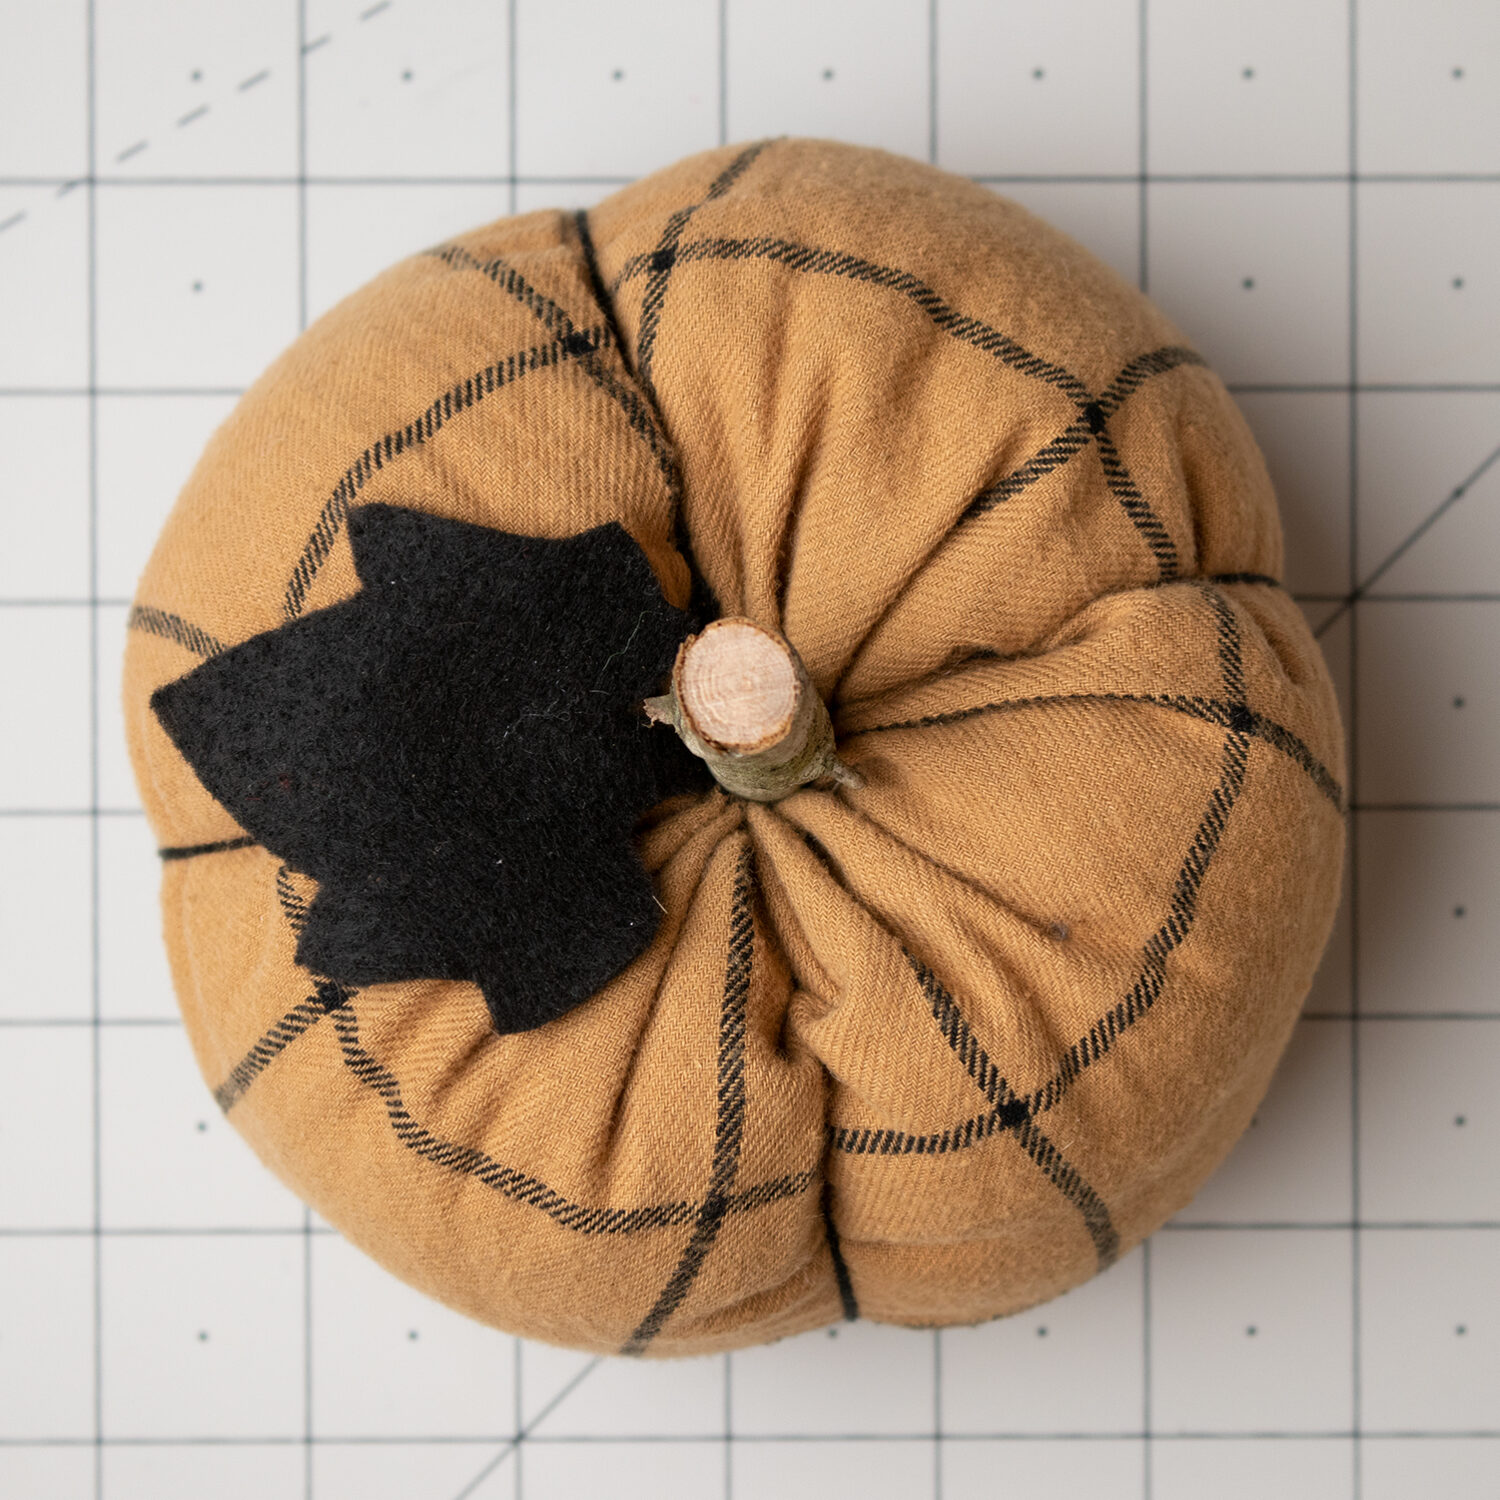 Fabric Pumpkin DIY